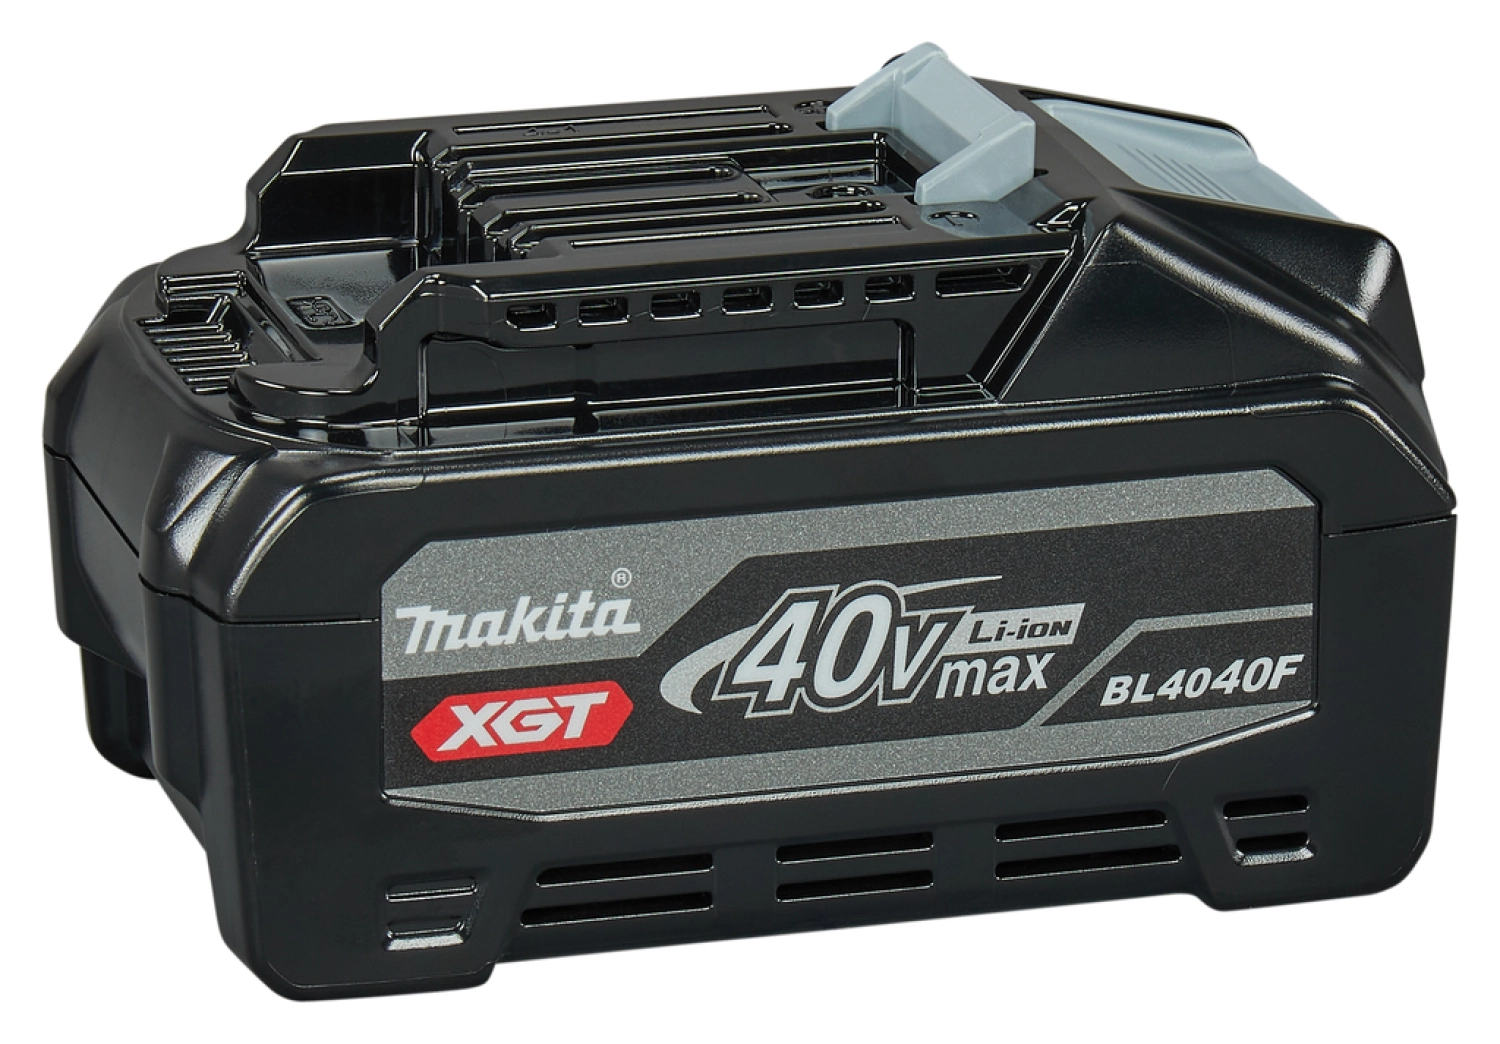 Makita BL4040F 40V XGT Max Li-Ion batterie- 4,0Ah-image